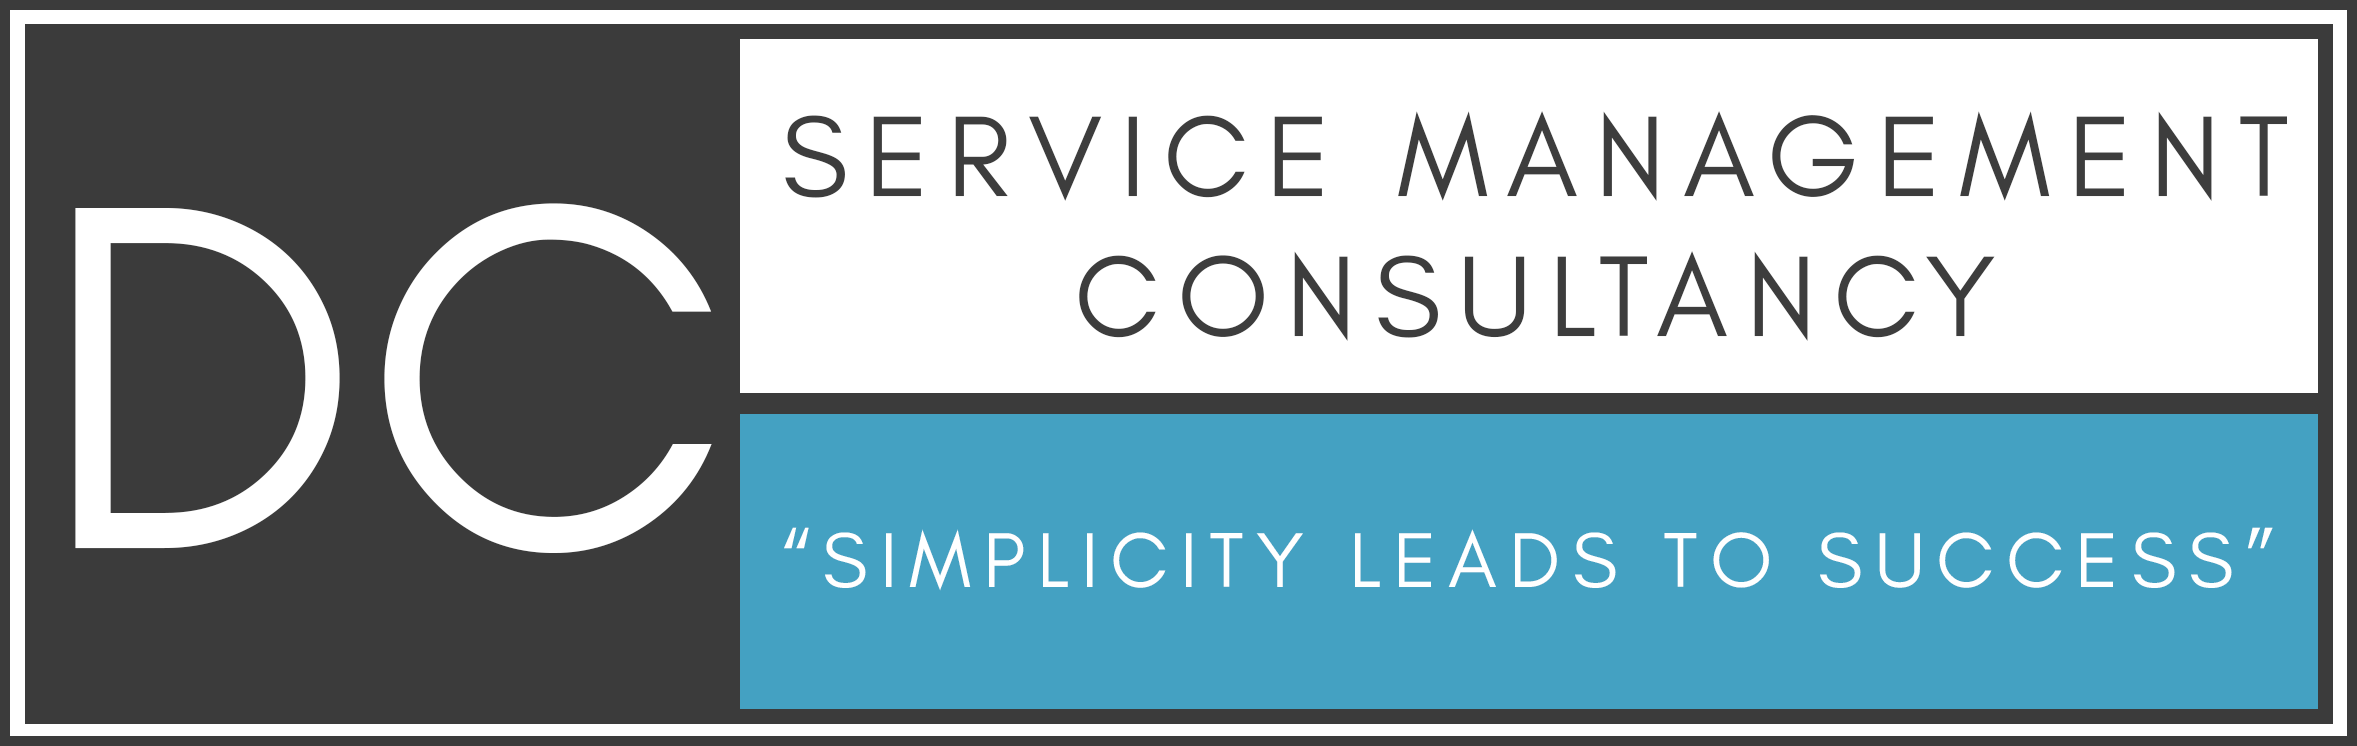 DC Service Management Consultancy